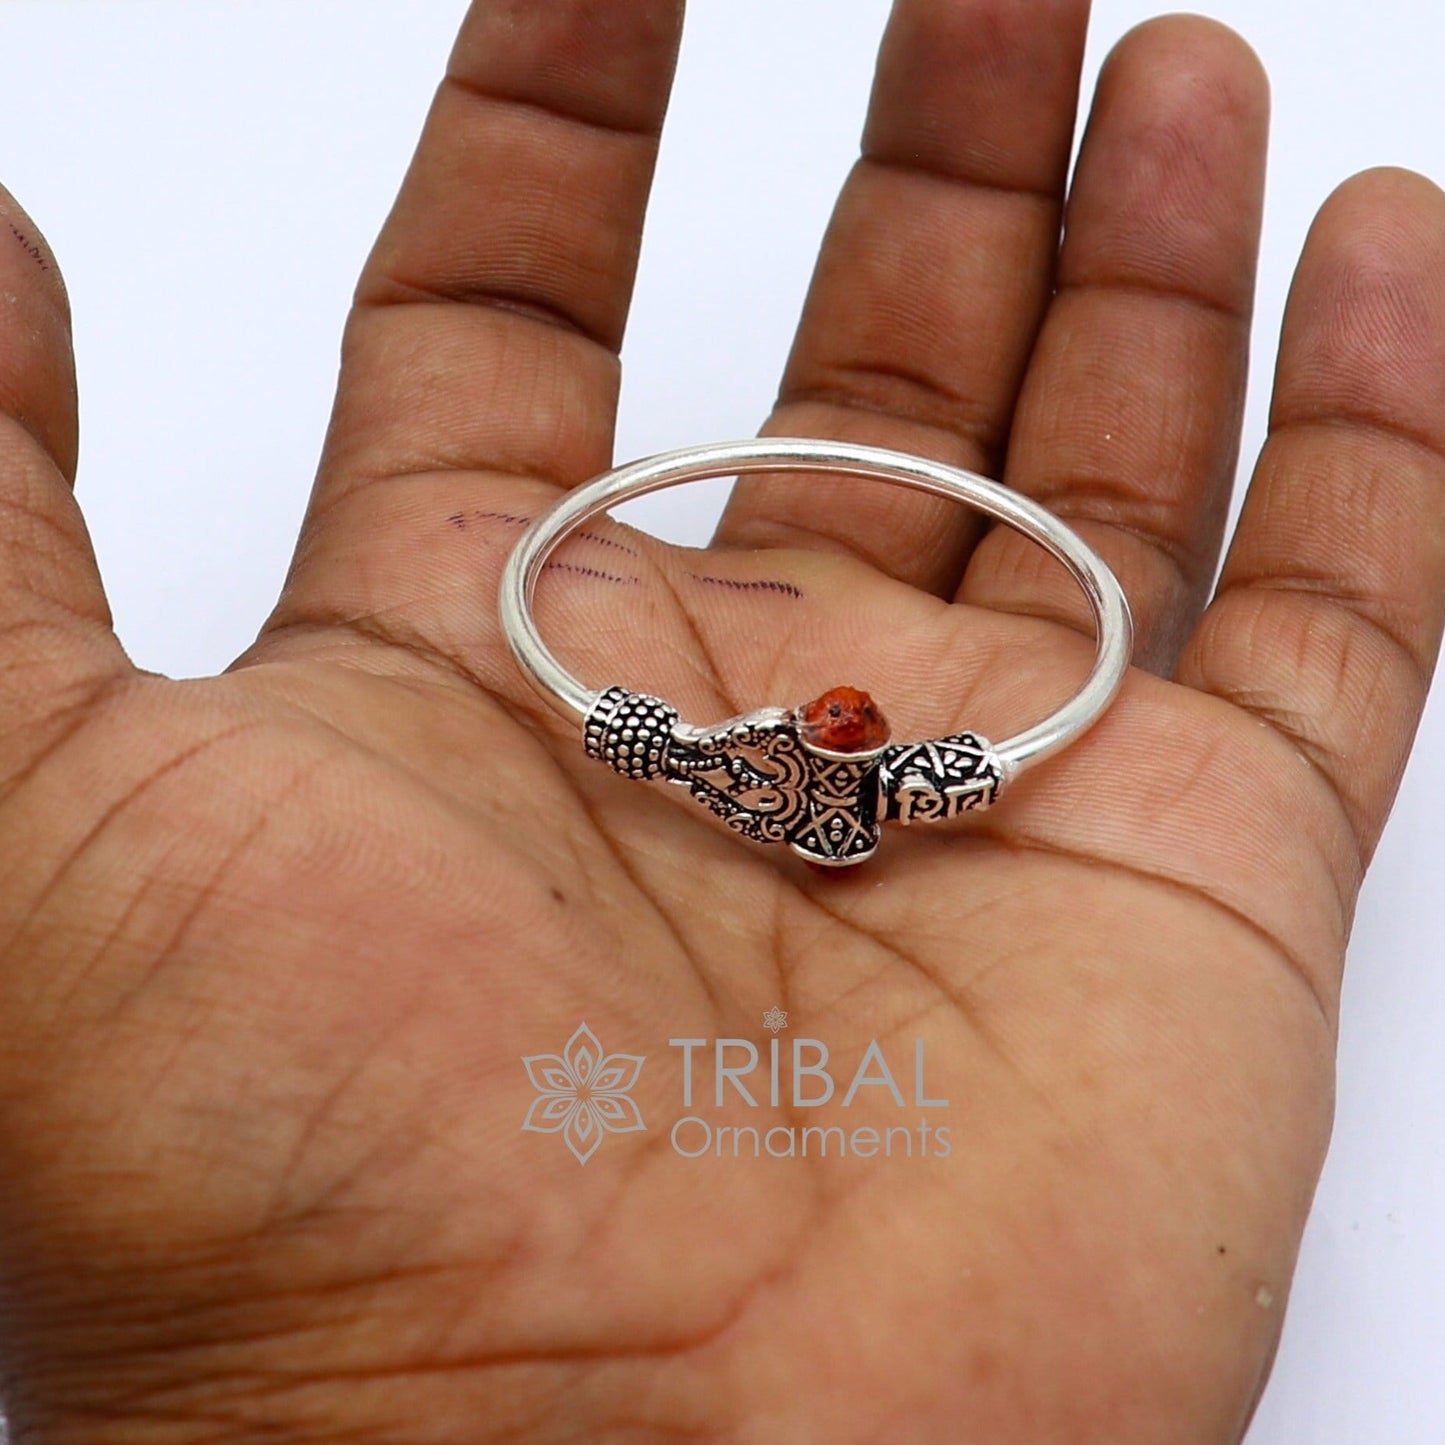 925 sterling silver Handmade gorgeous Lord shiva trident baby bangle bracelet kada, amazing Shiv kada unisex bracelet tribal jewelry nsk682 - TRIBAL ORNAMENTS